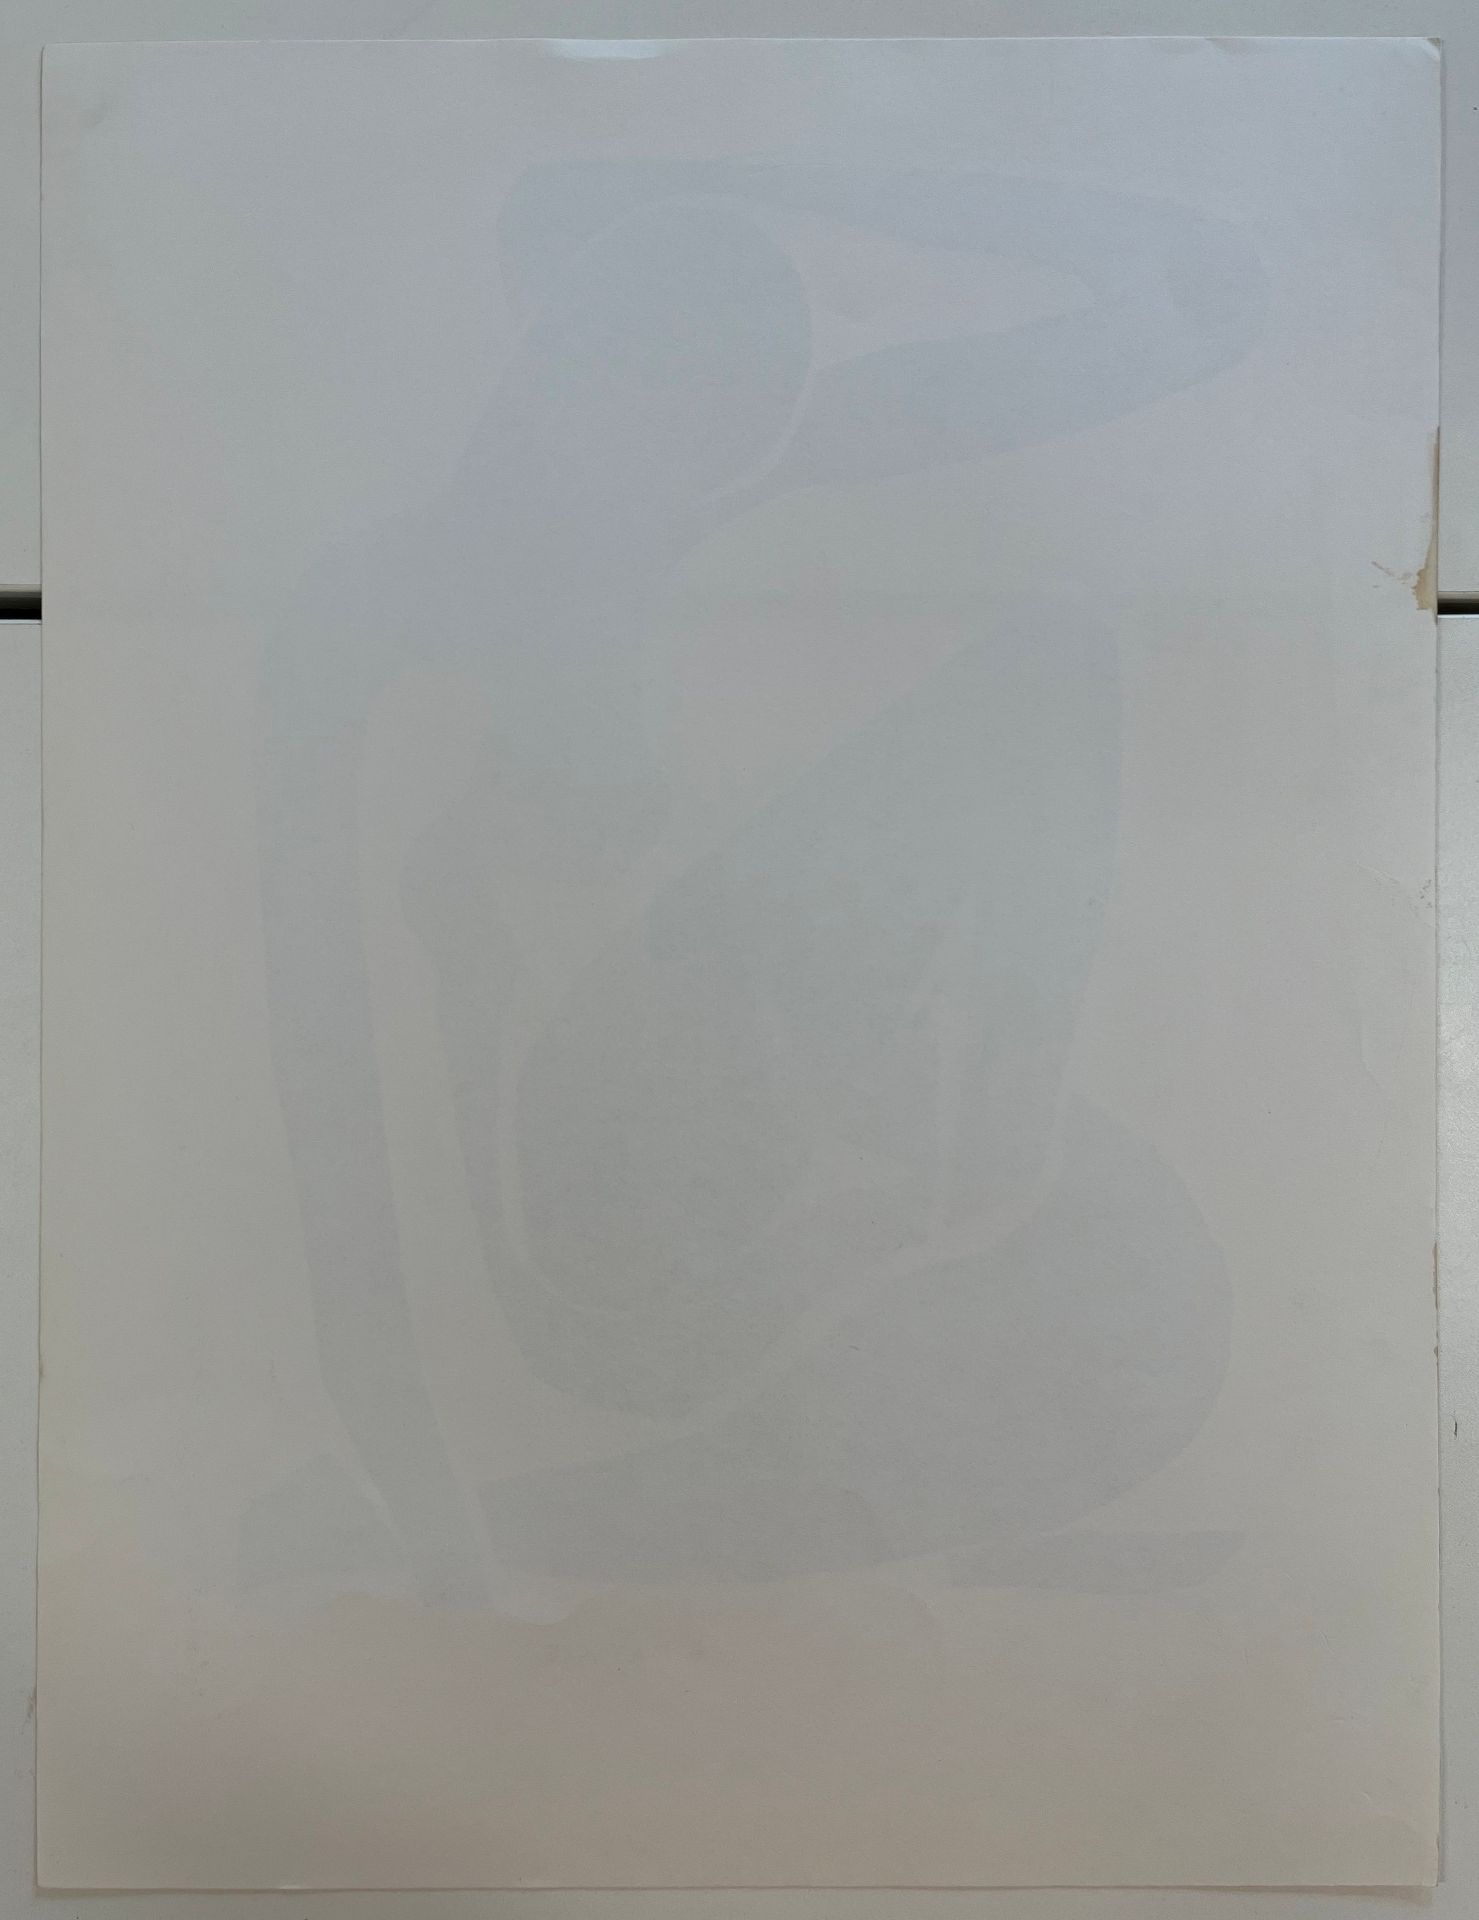 SIX VINTAGE LITHOGRAPHS ON PAPER AFTER HENRI MATISSE - Image 3 of 19